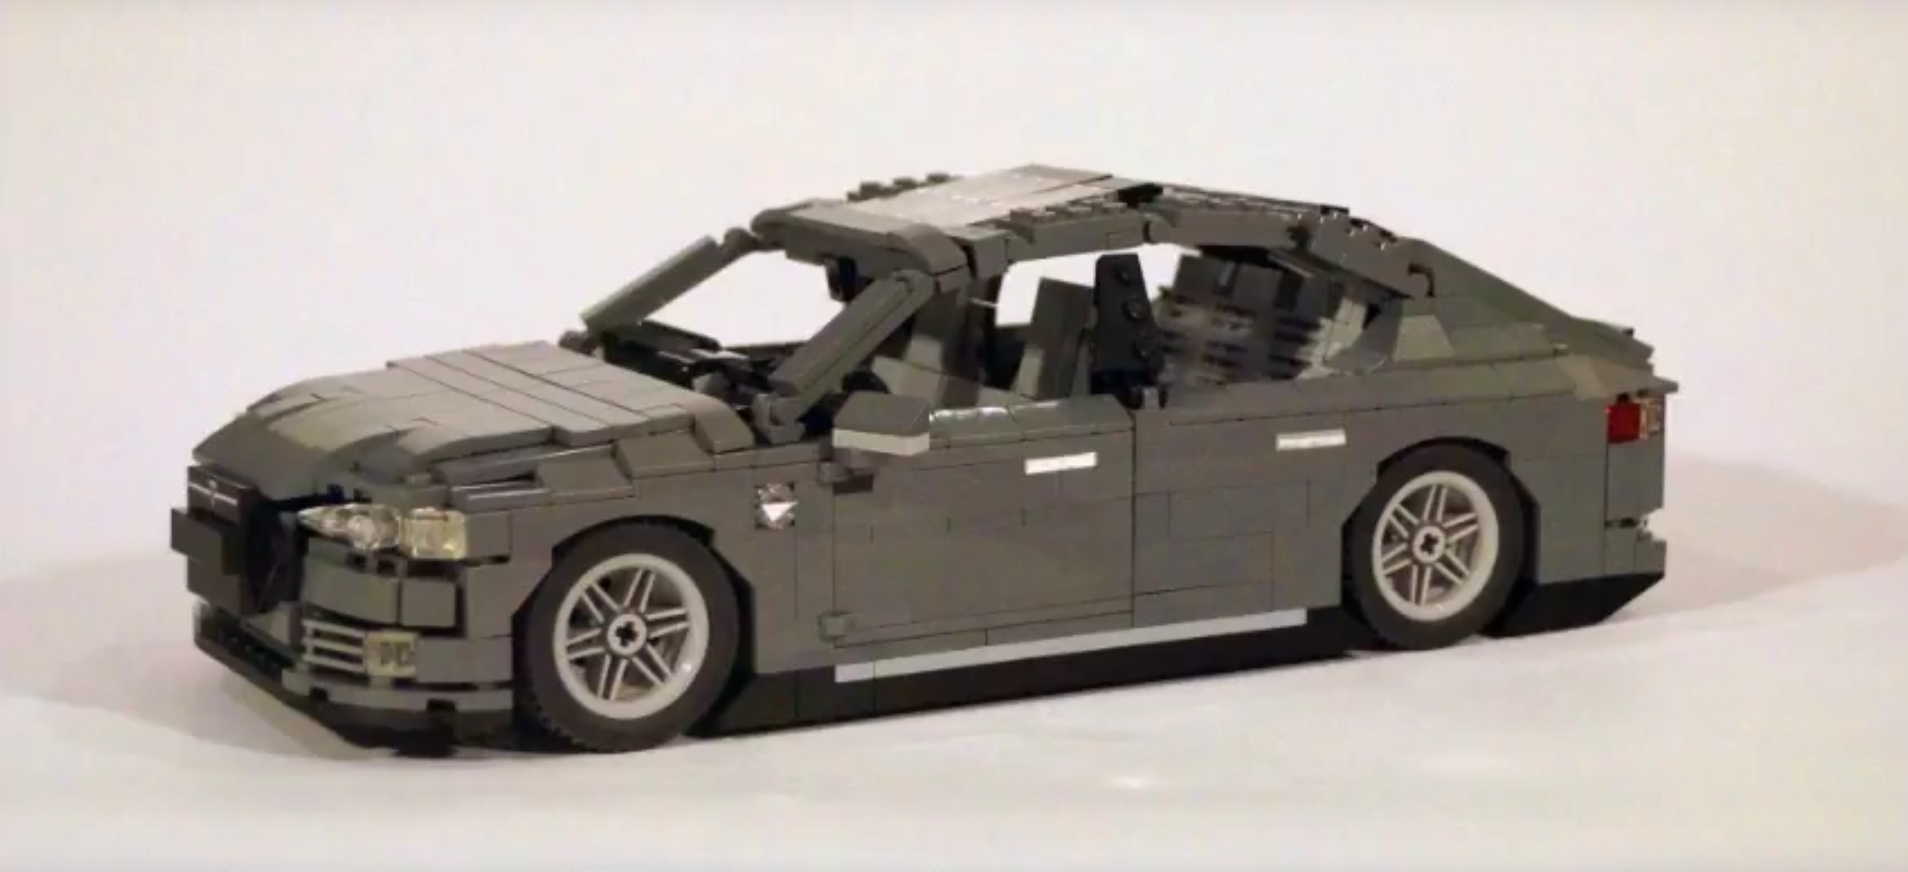 Model S lego